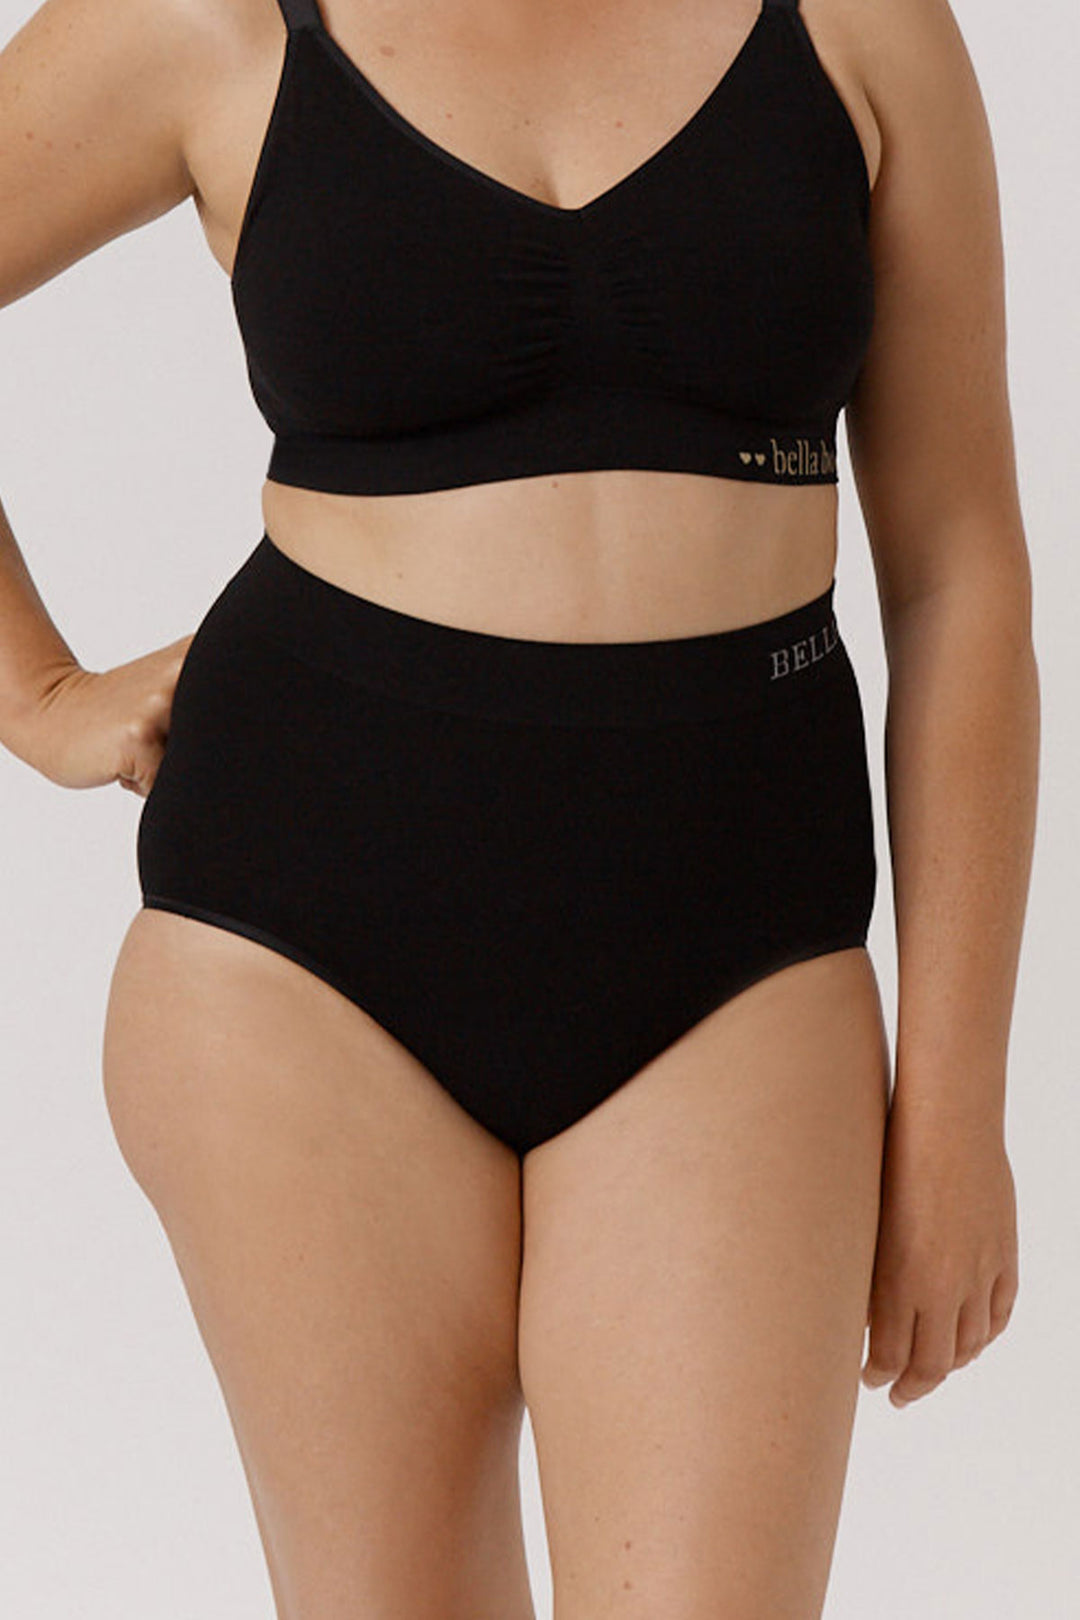 Women's slimming & firming high waist shapewear underwear | Bella Bodies Australia | black| front